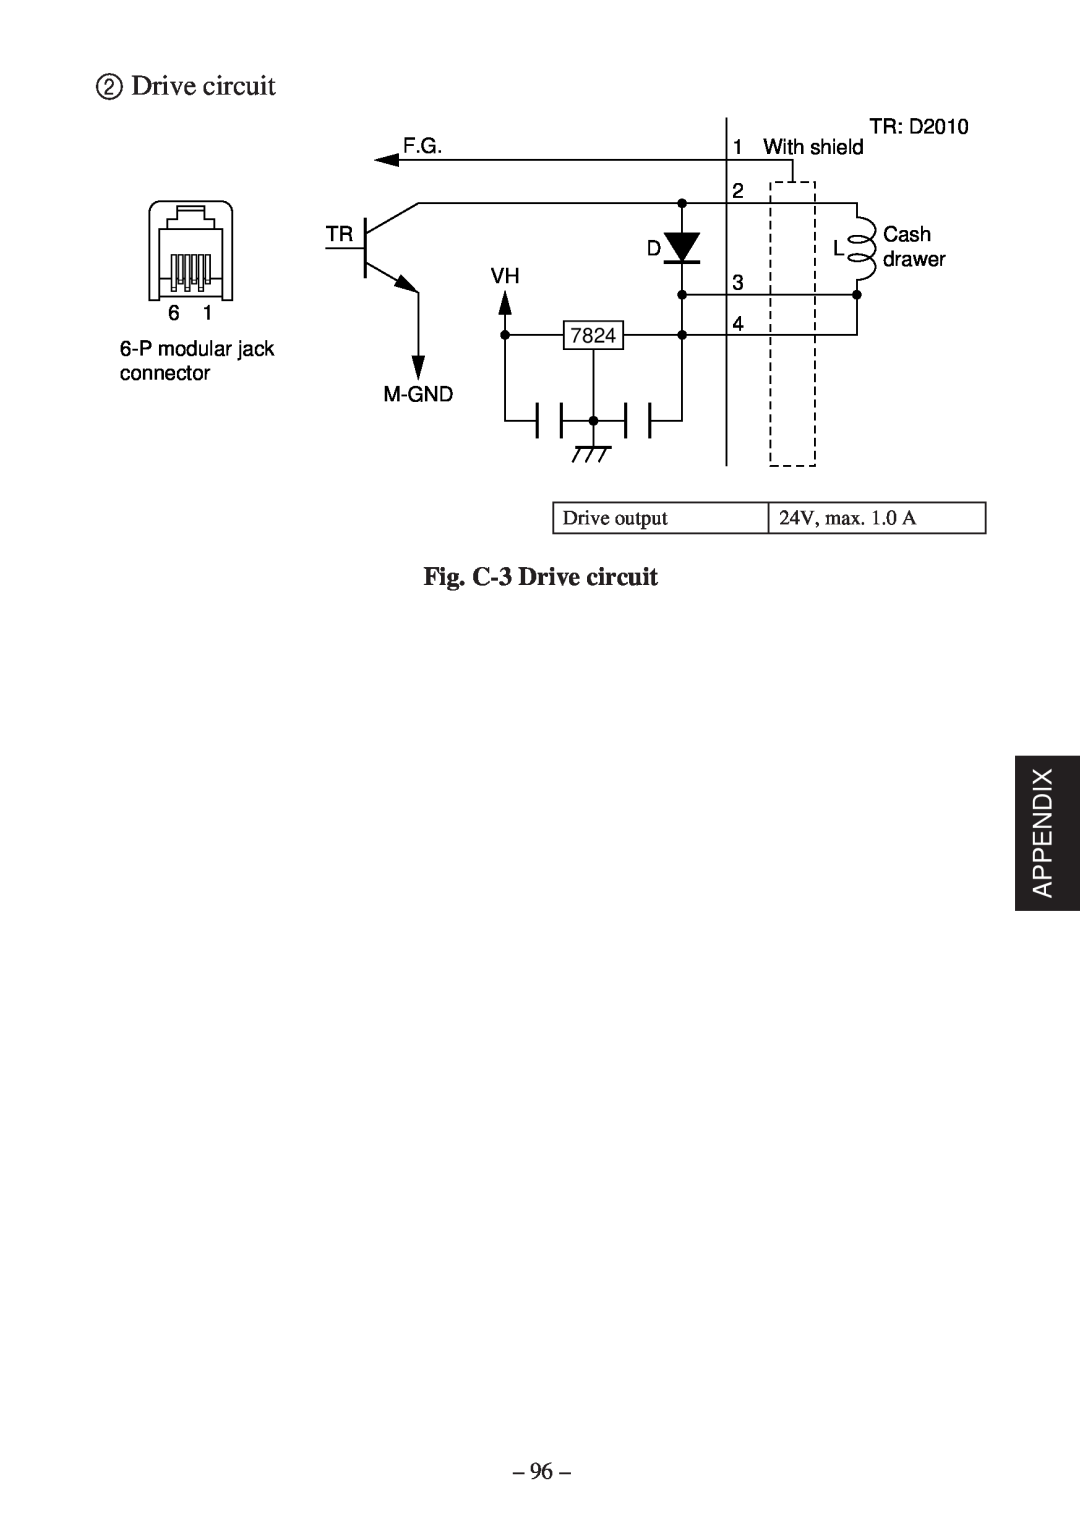 Star Micronics SP200F user manual Fig. C-3 Drive circuit, Appendix, drawer 